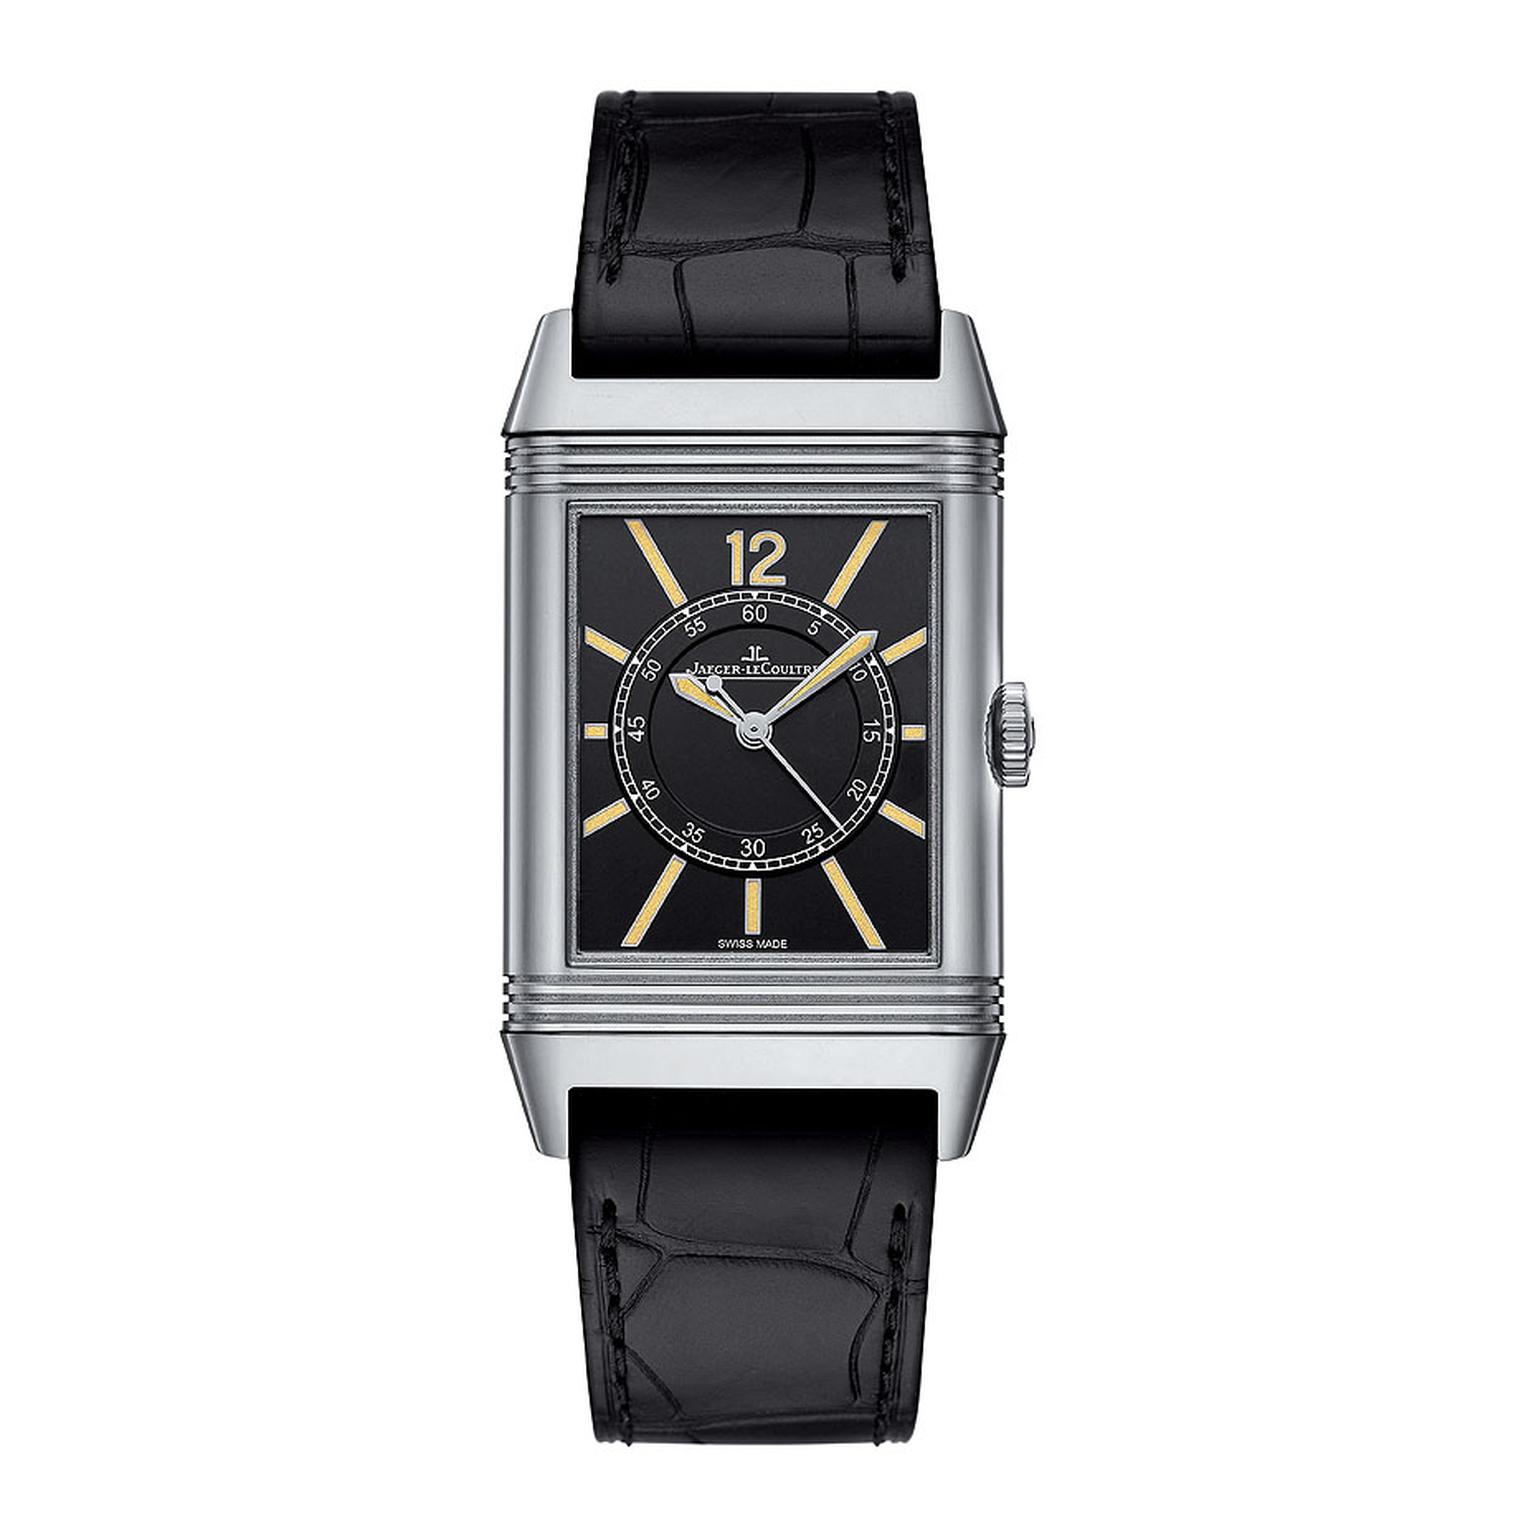 Jaeger-LeCoultre Grande Reverso 1931 Seconde Centrale watch.jpg